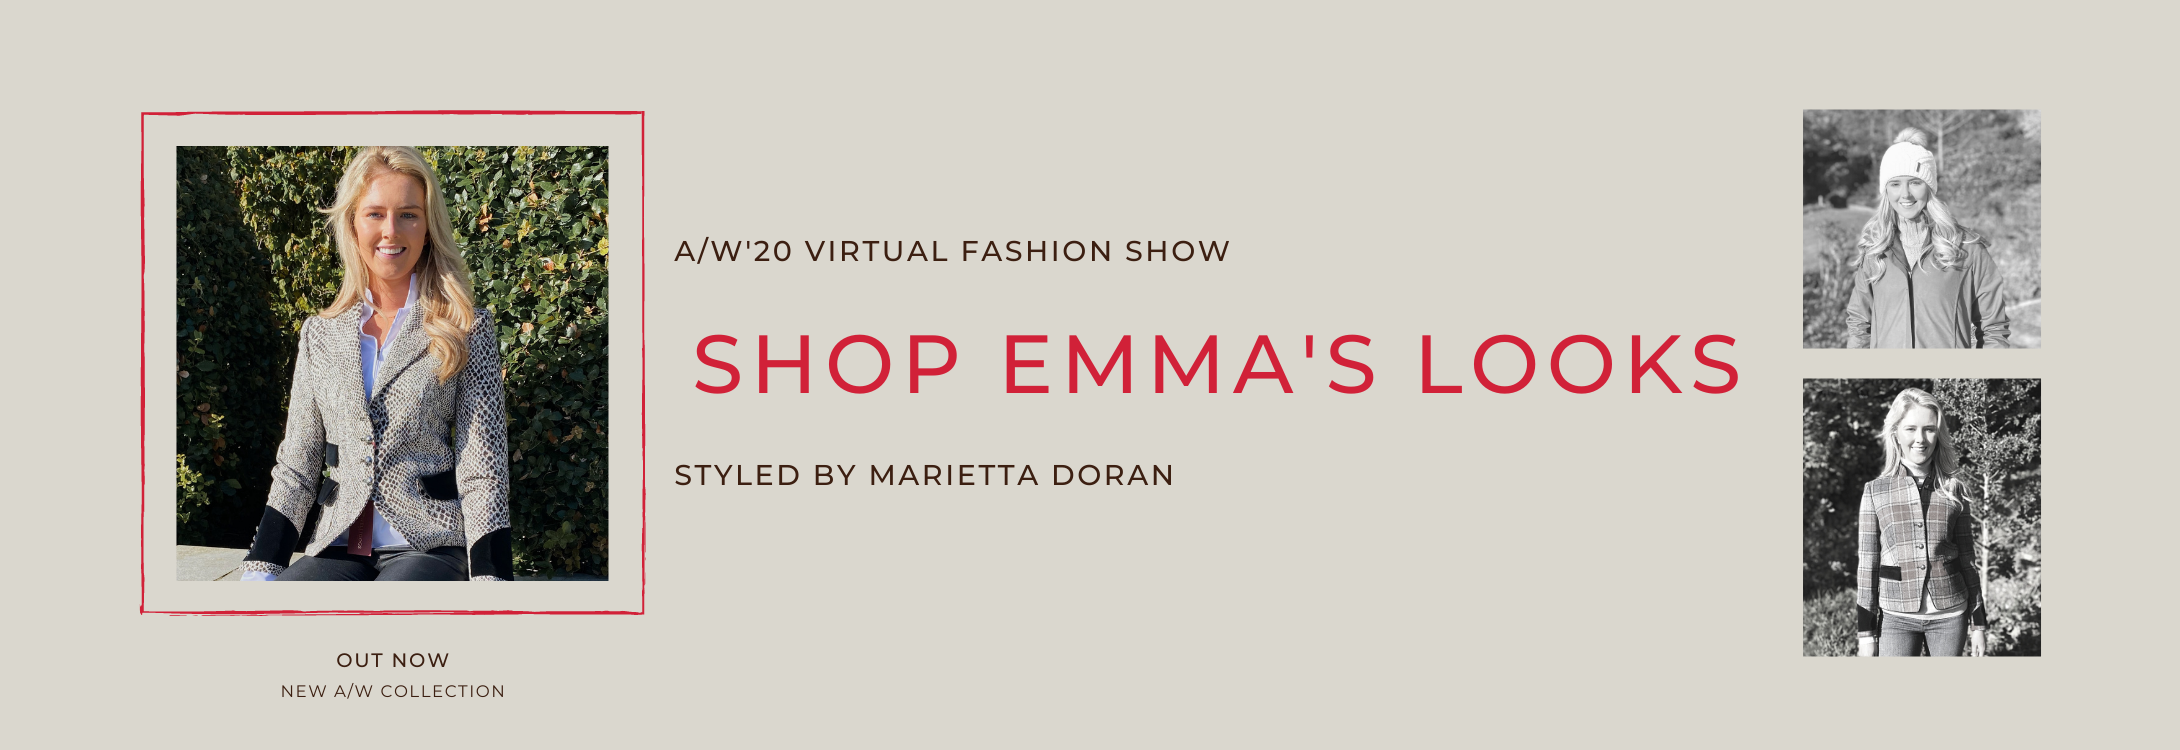 Emma on AW Virtual Fashion Show